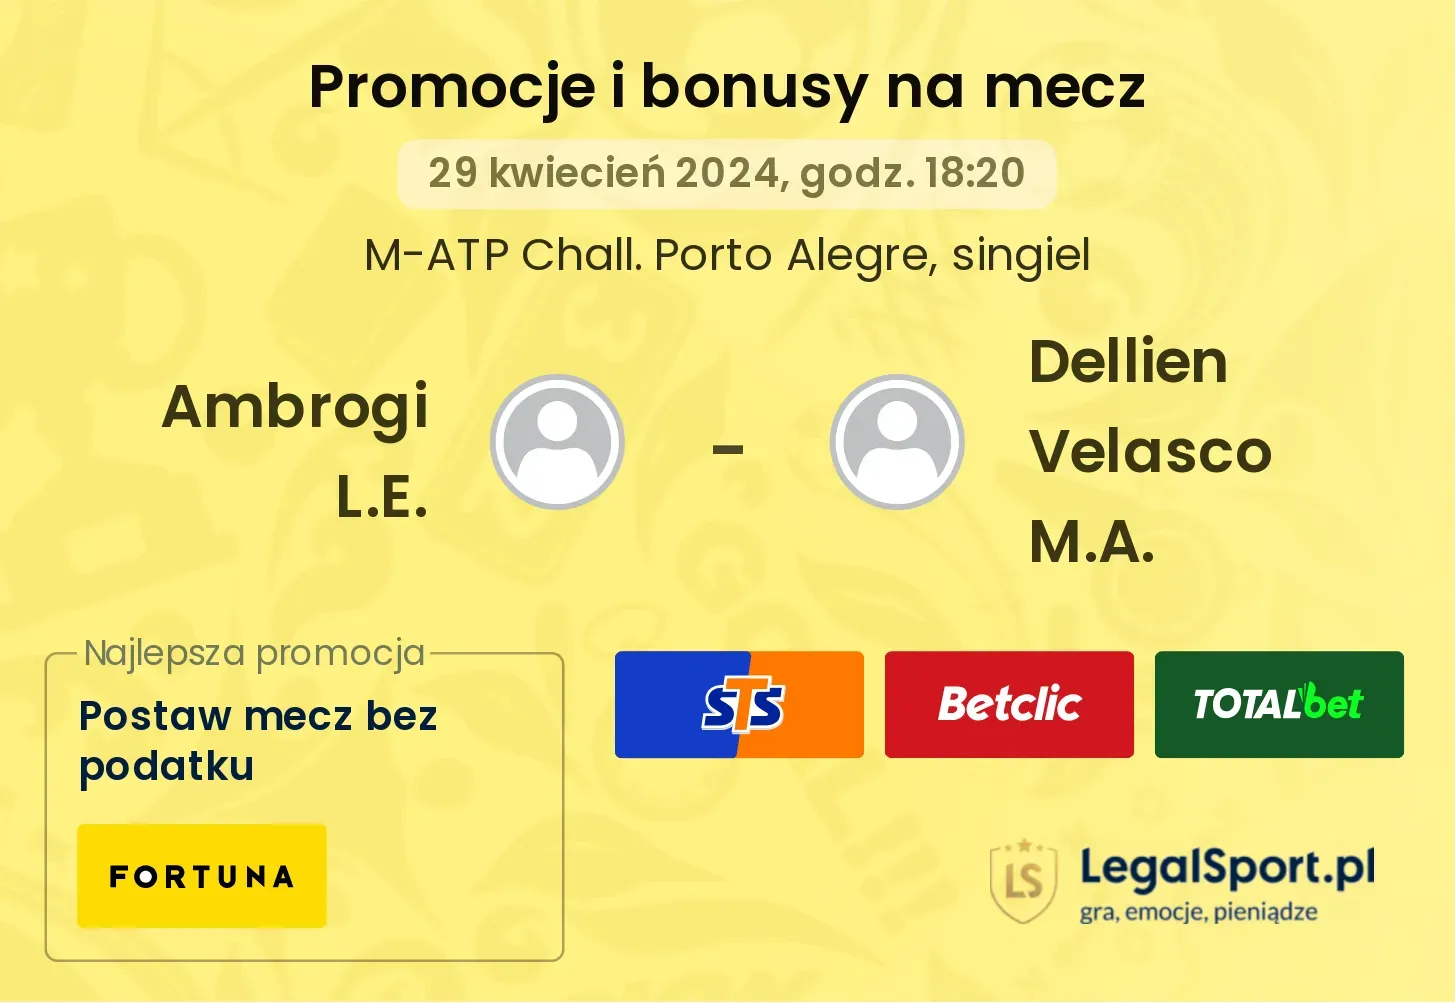 Ambrogi L.E. - Dellien Velasco M.A. promocje bonusy na mecz